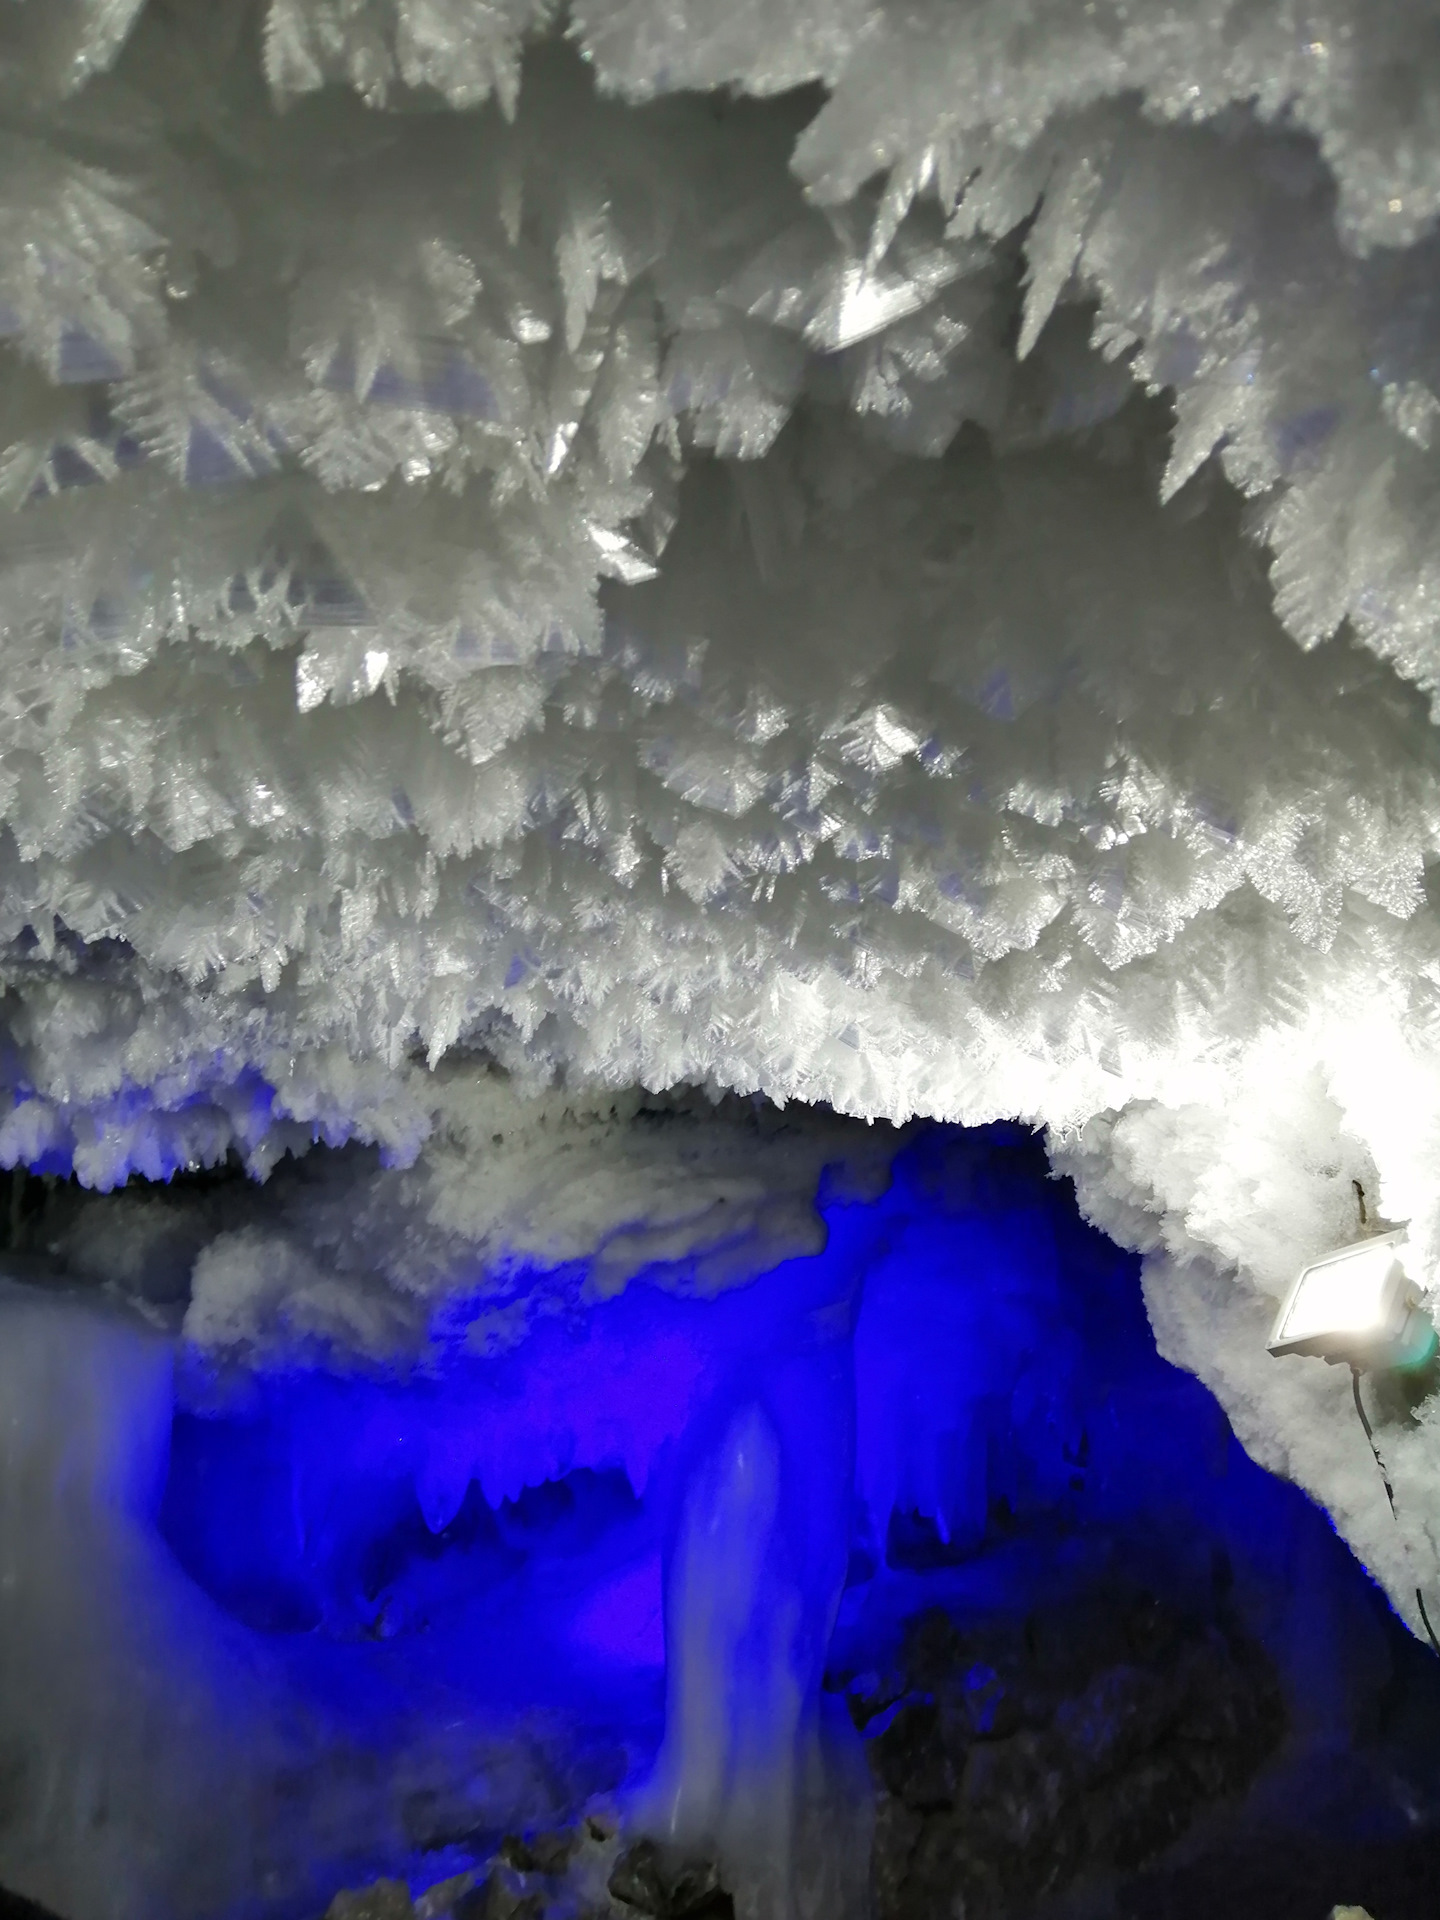 Кунгурская Ледяная пещера